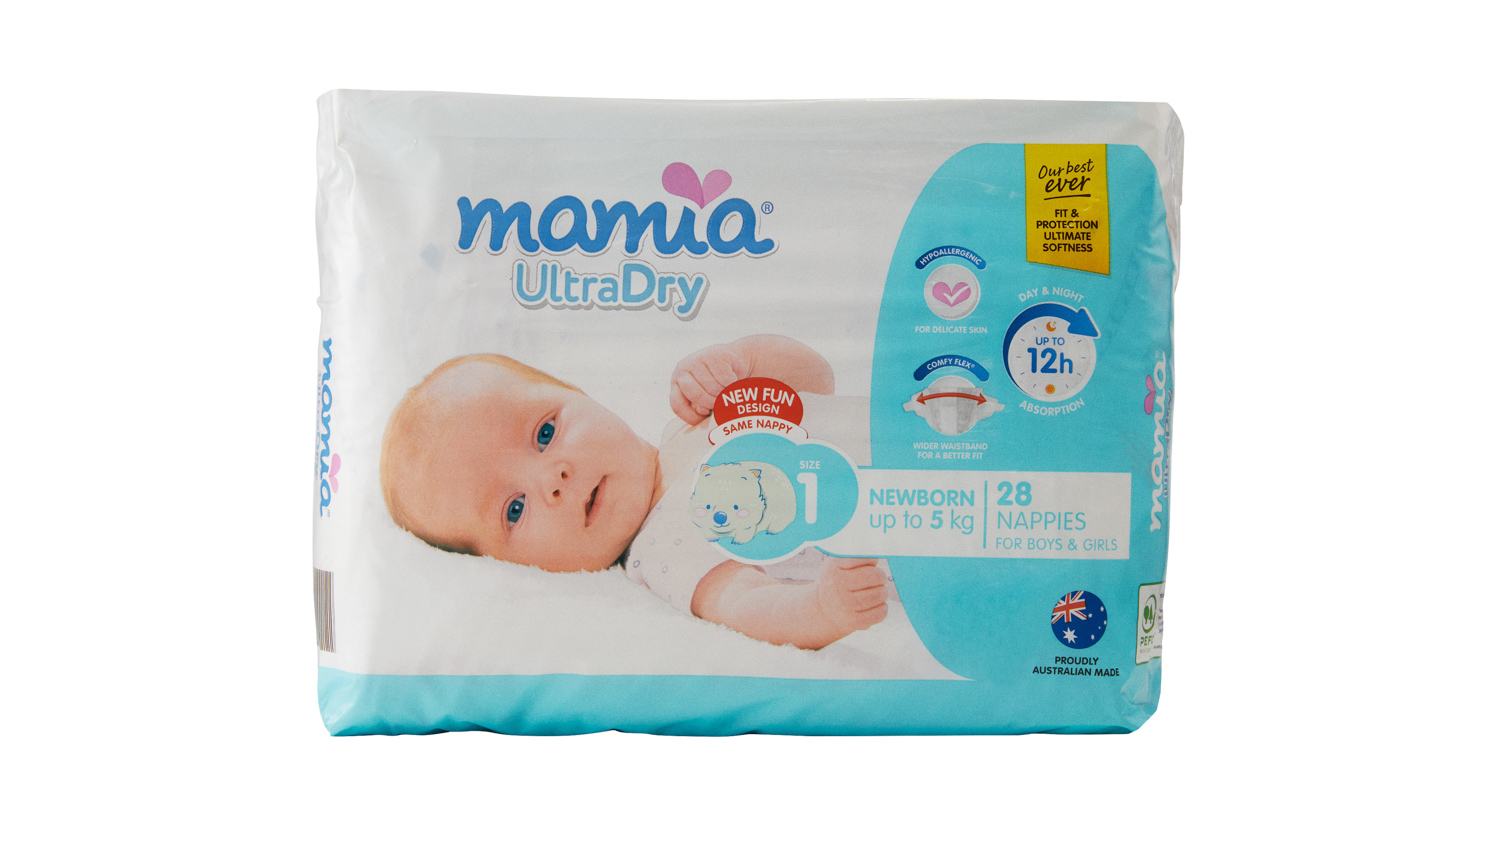 Aldi Mamia Ultra Dry Size 1 Newborn carousel image